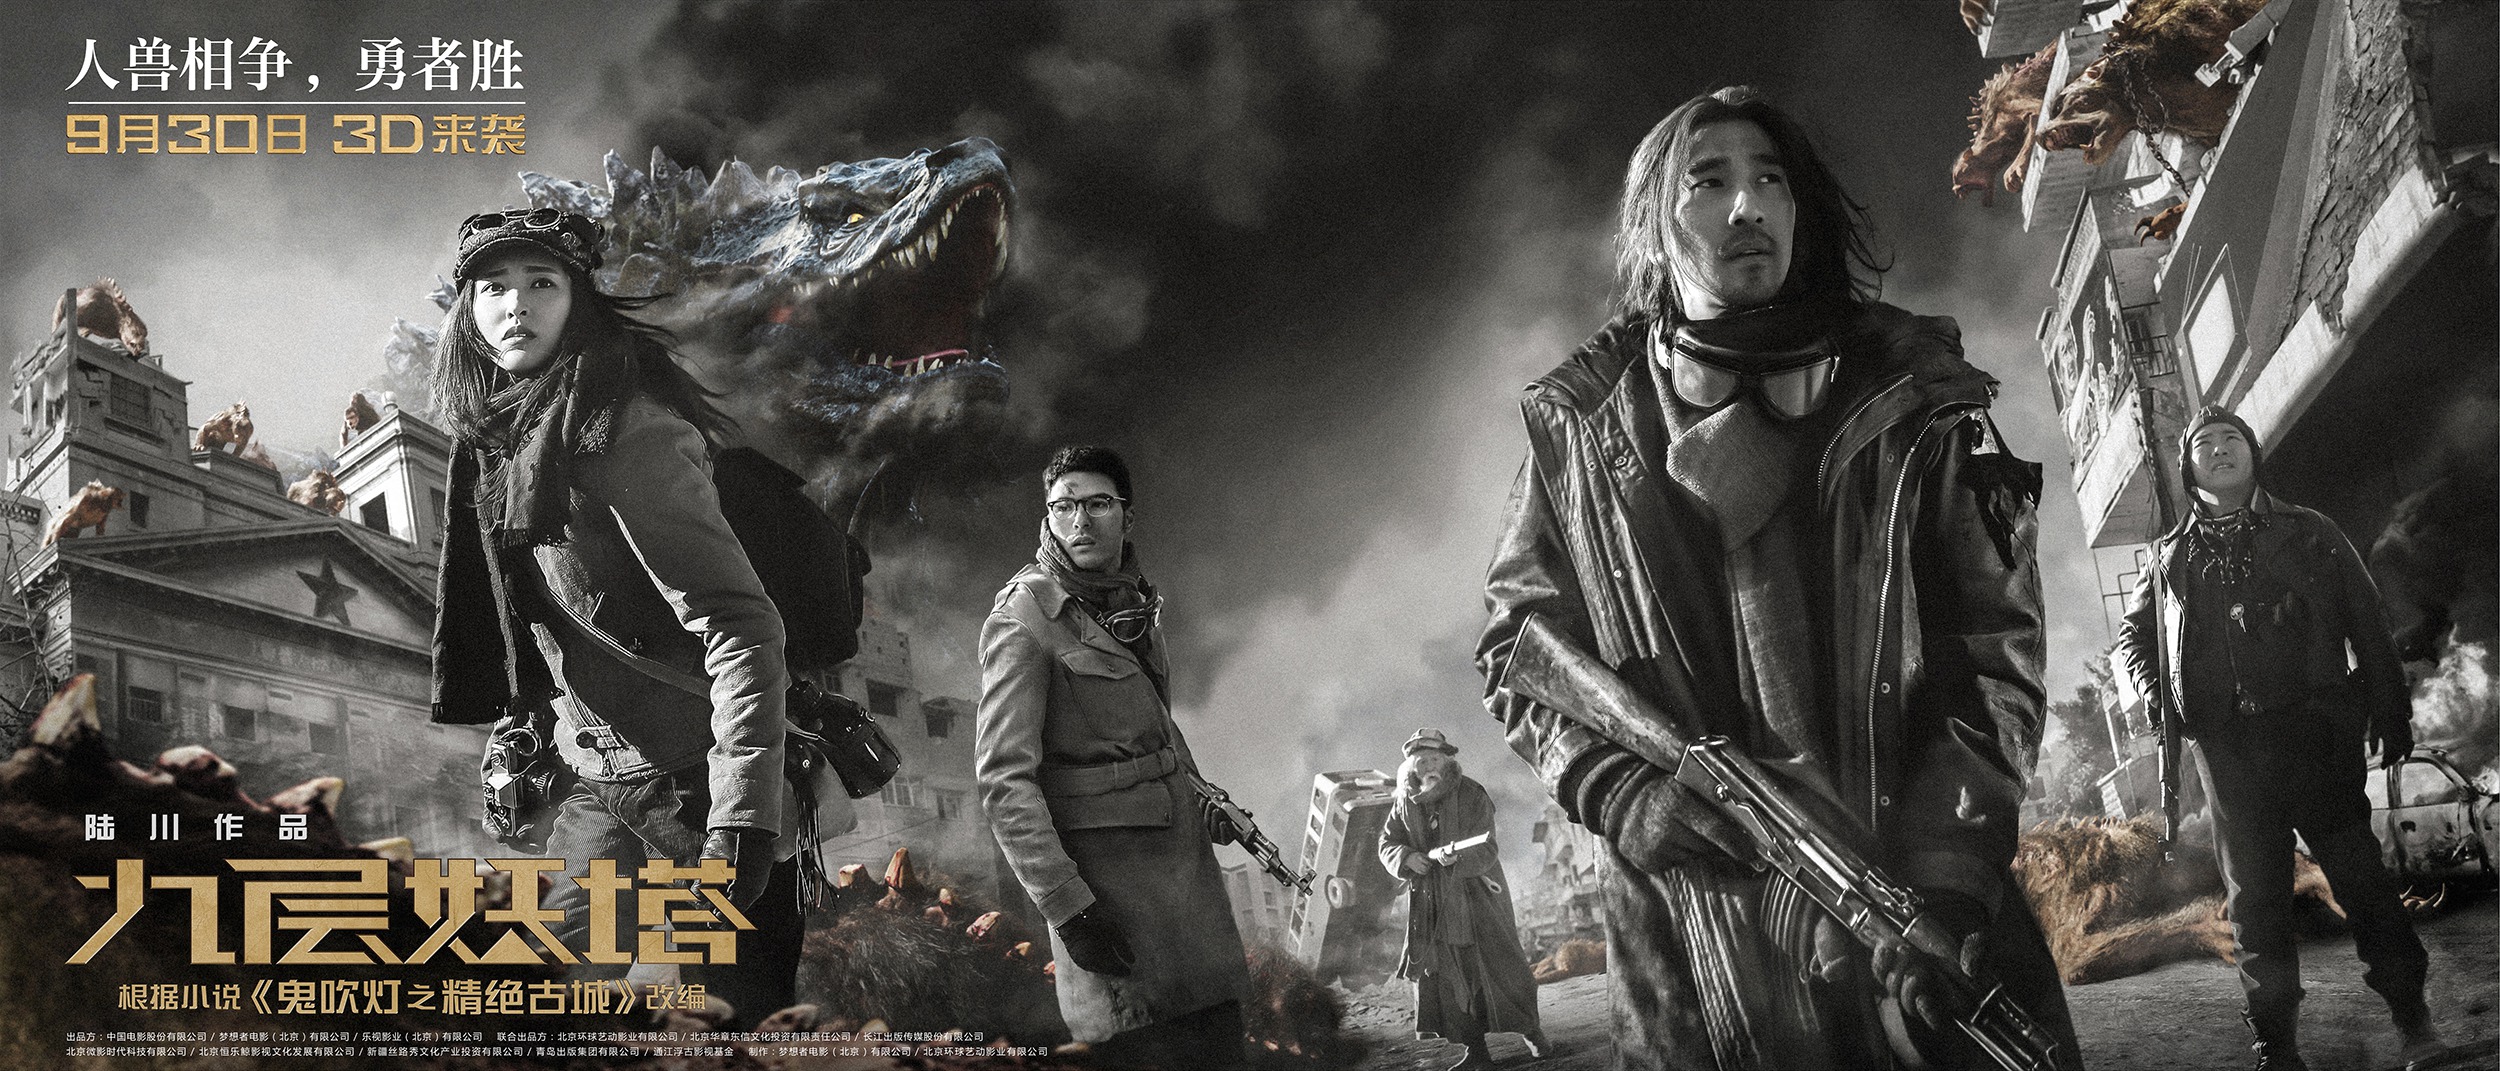 Mega Sized Movie Poster Image for Jiu ceng yao ta (#1 of 2)